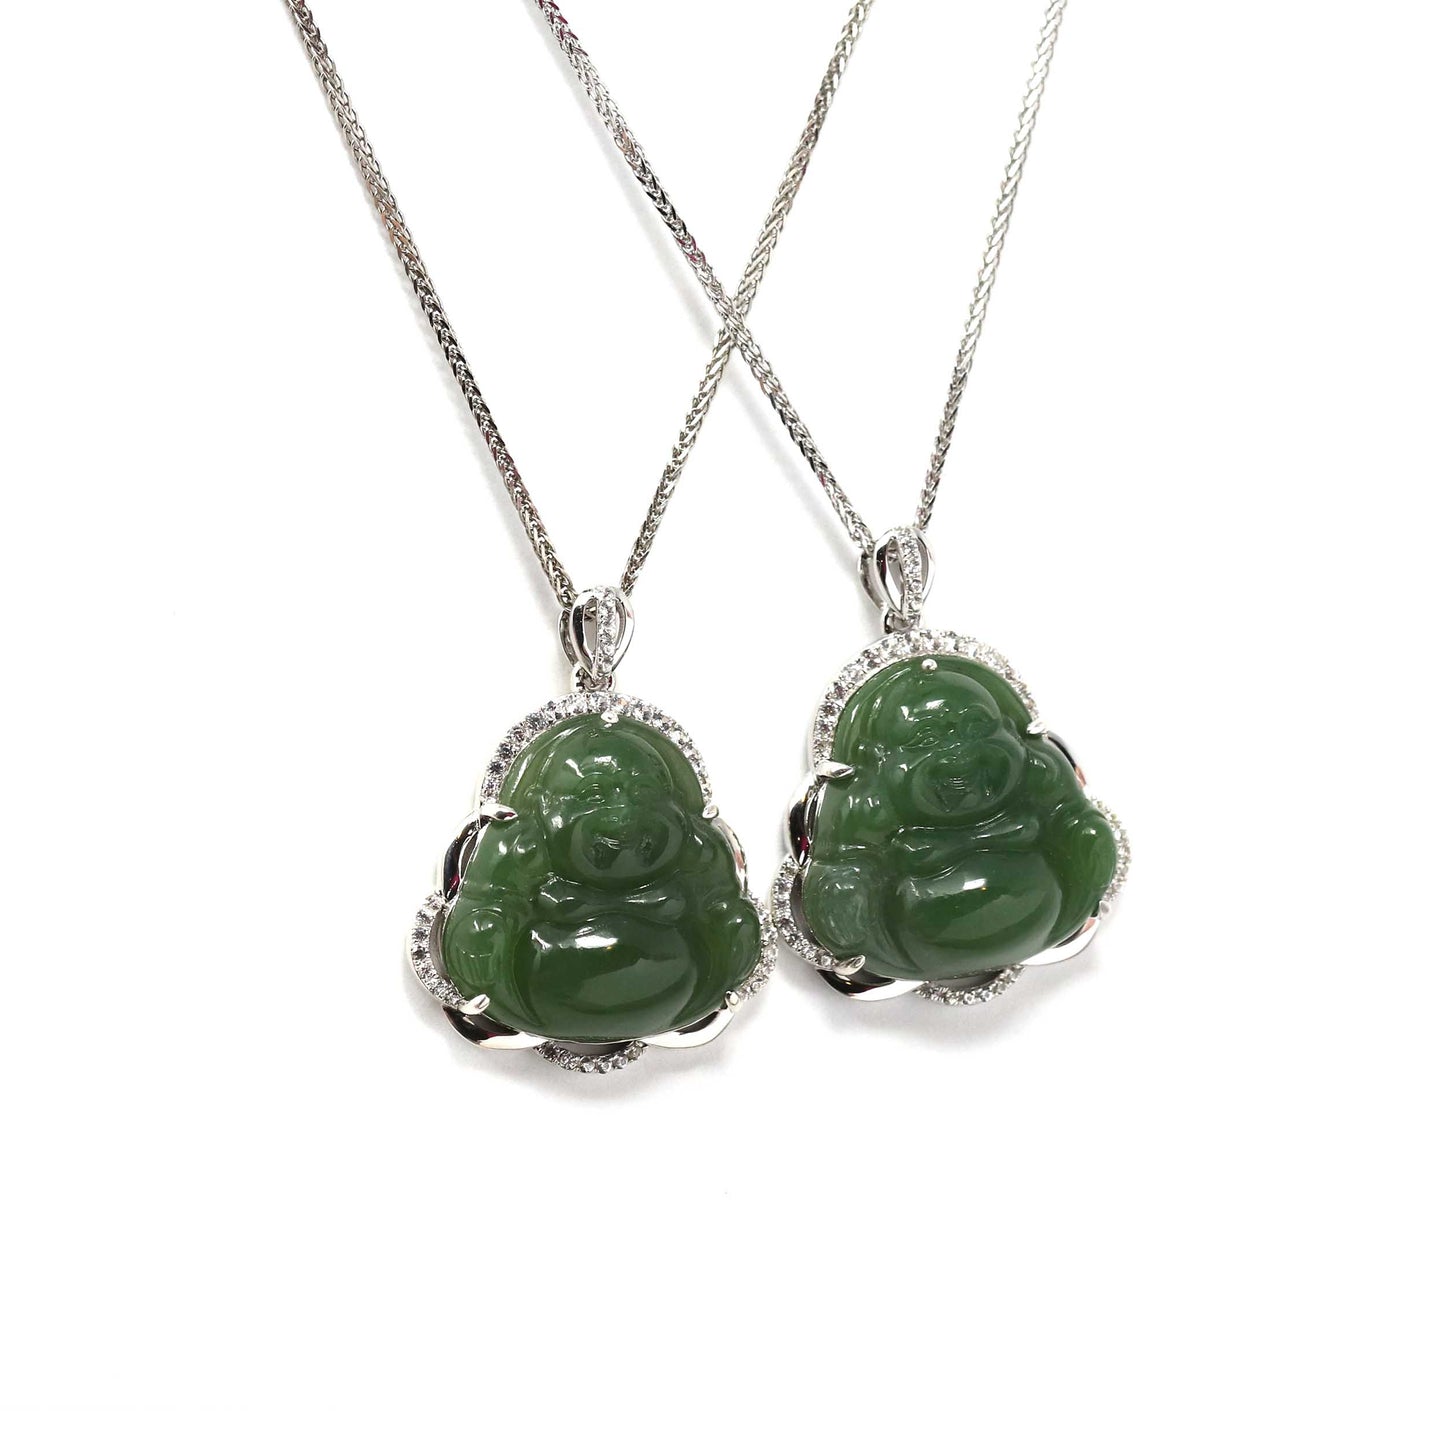 RealJade® Co. Sterling Silver Genuine Nephrite Green Jade Small Buddha Pendant Necklace